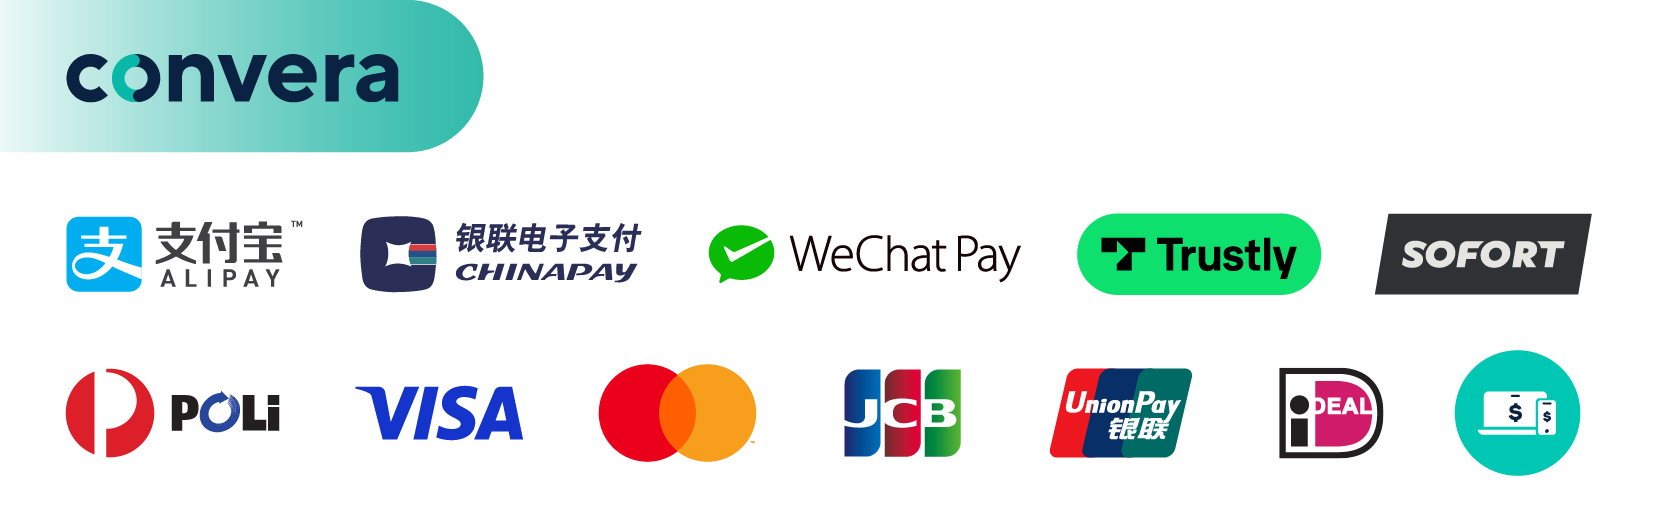 Convera: ALIPAY, CHINAPAY, WeChat Pay, Trustly, SOFORT, POLi, VISA, MasterCard, JCB, UnionPay, iDEAL and more.